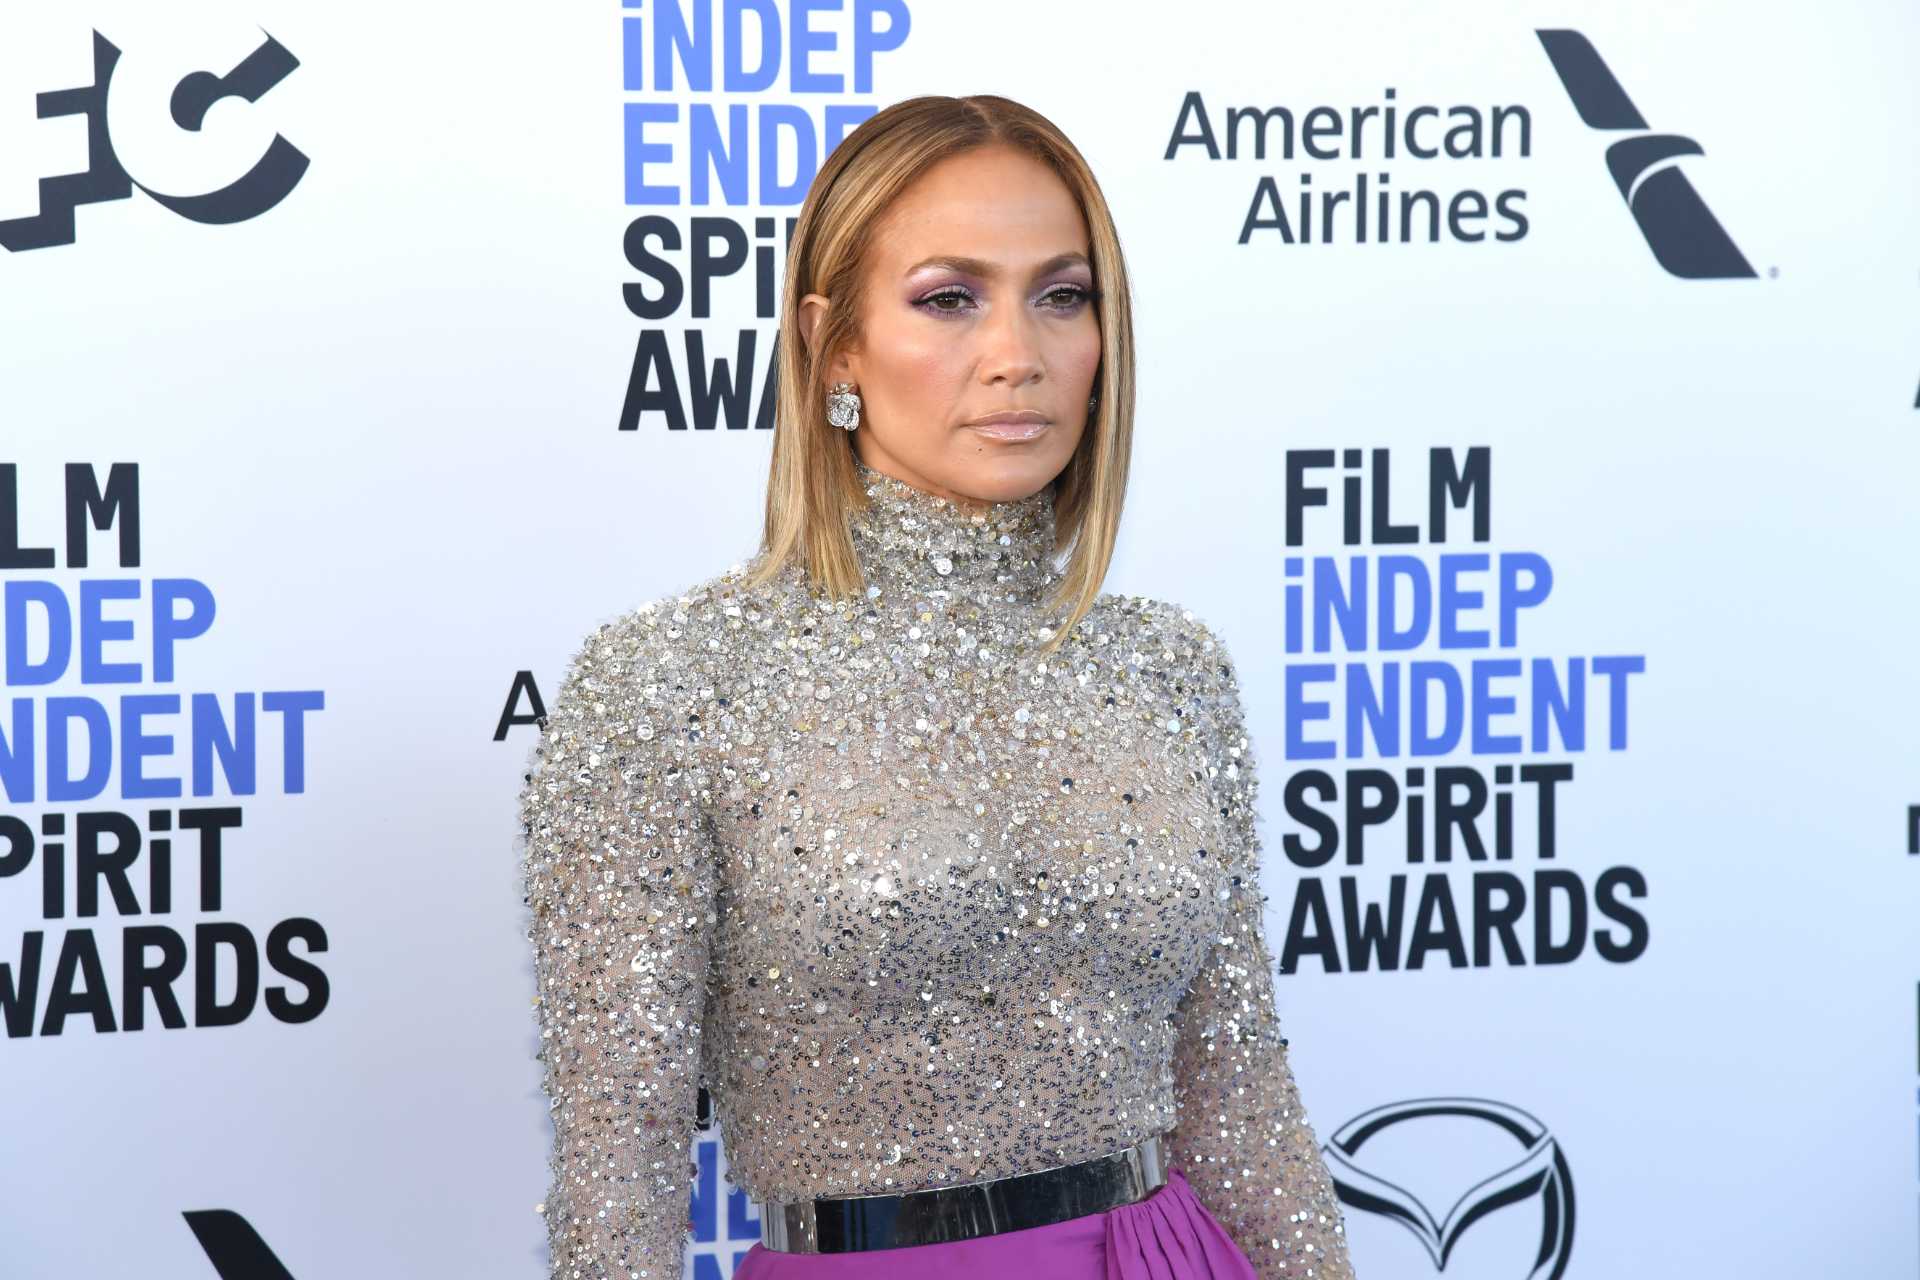 Jennifer Lopez at the 2020 Film Independent Spirit Awards in February 2020